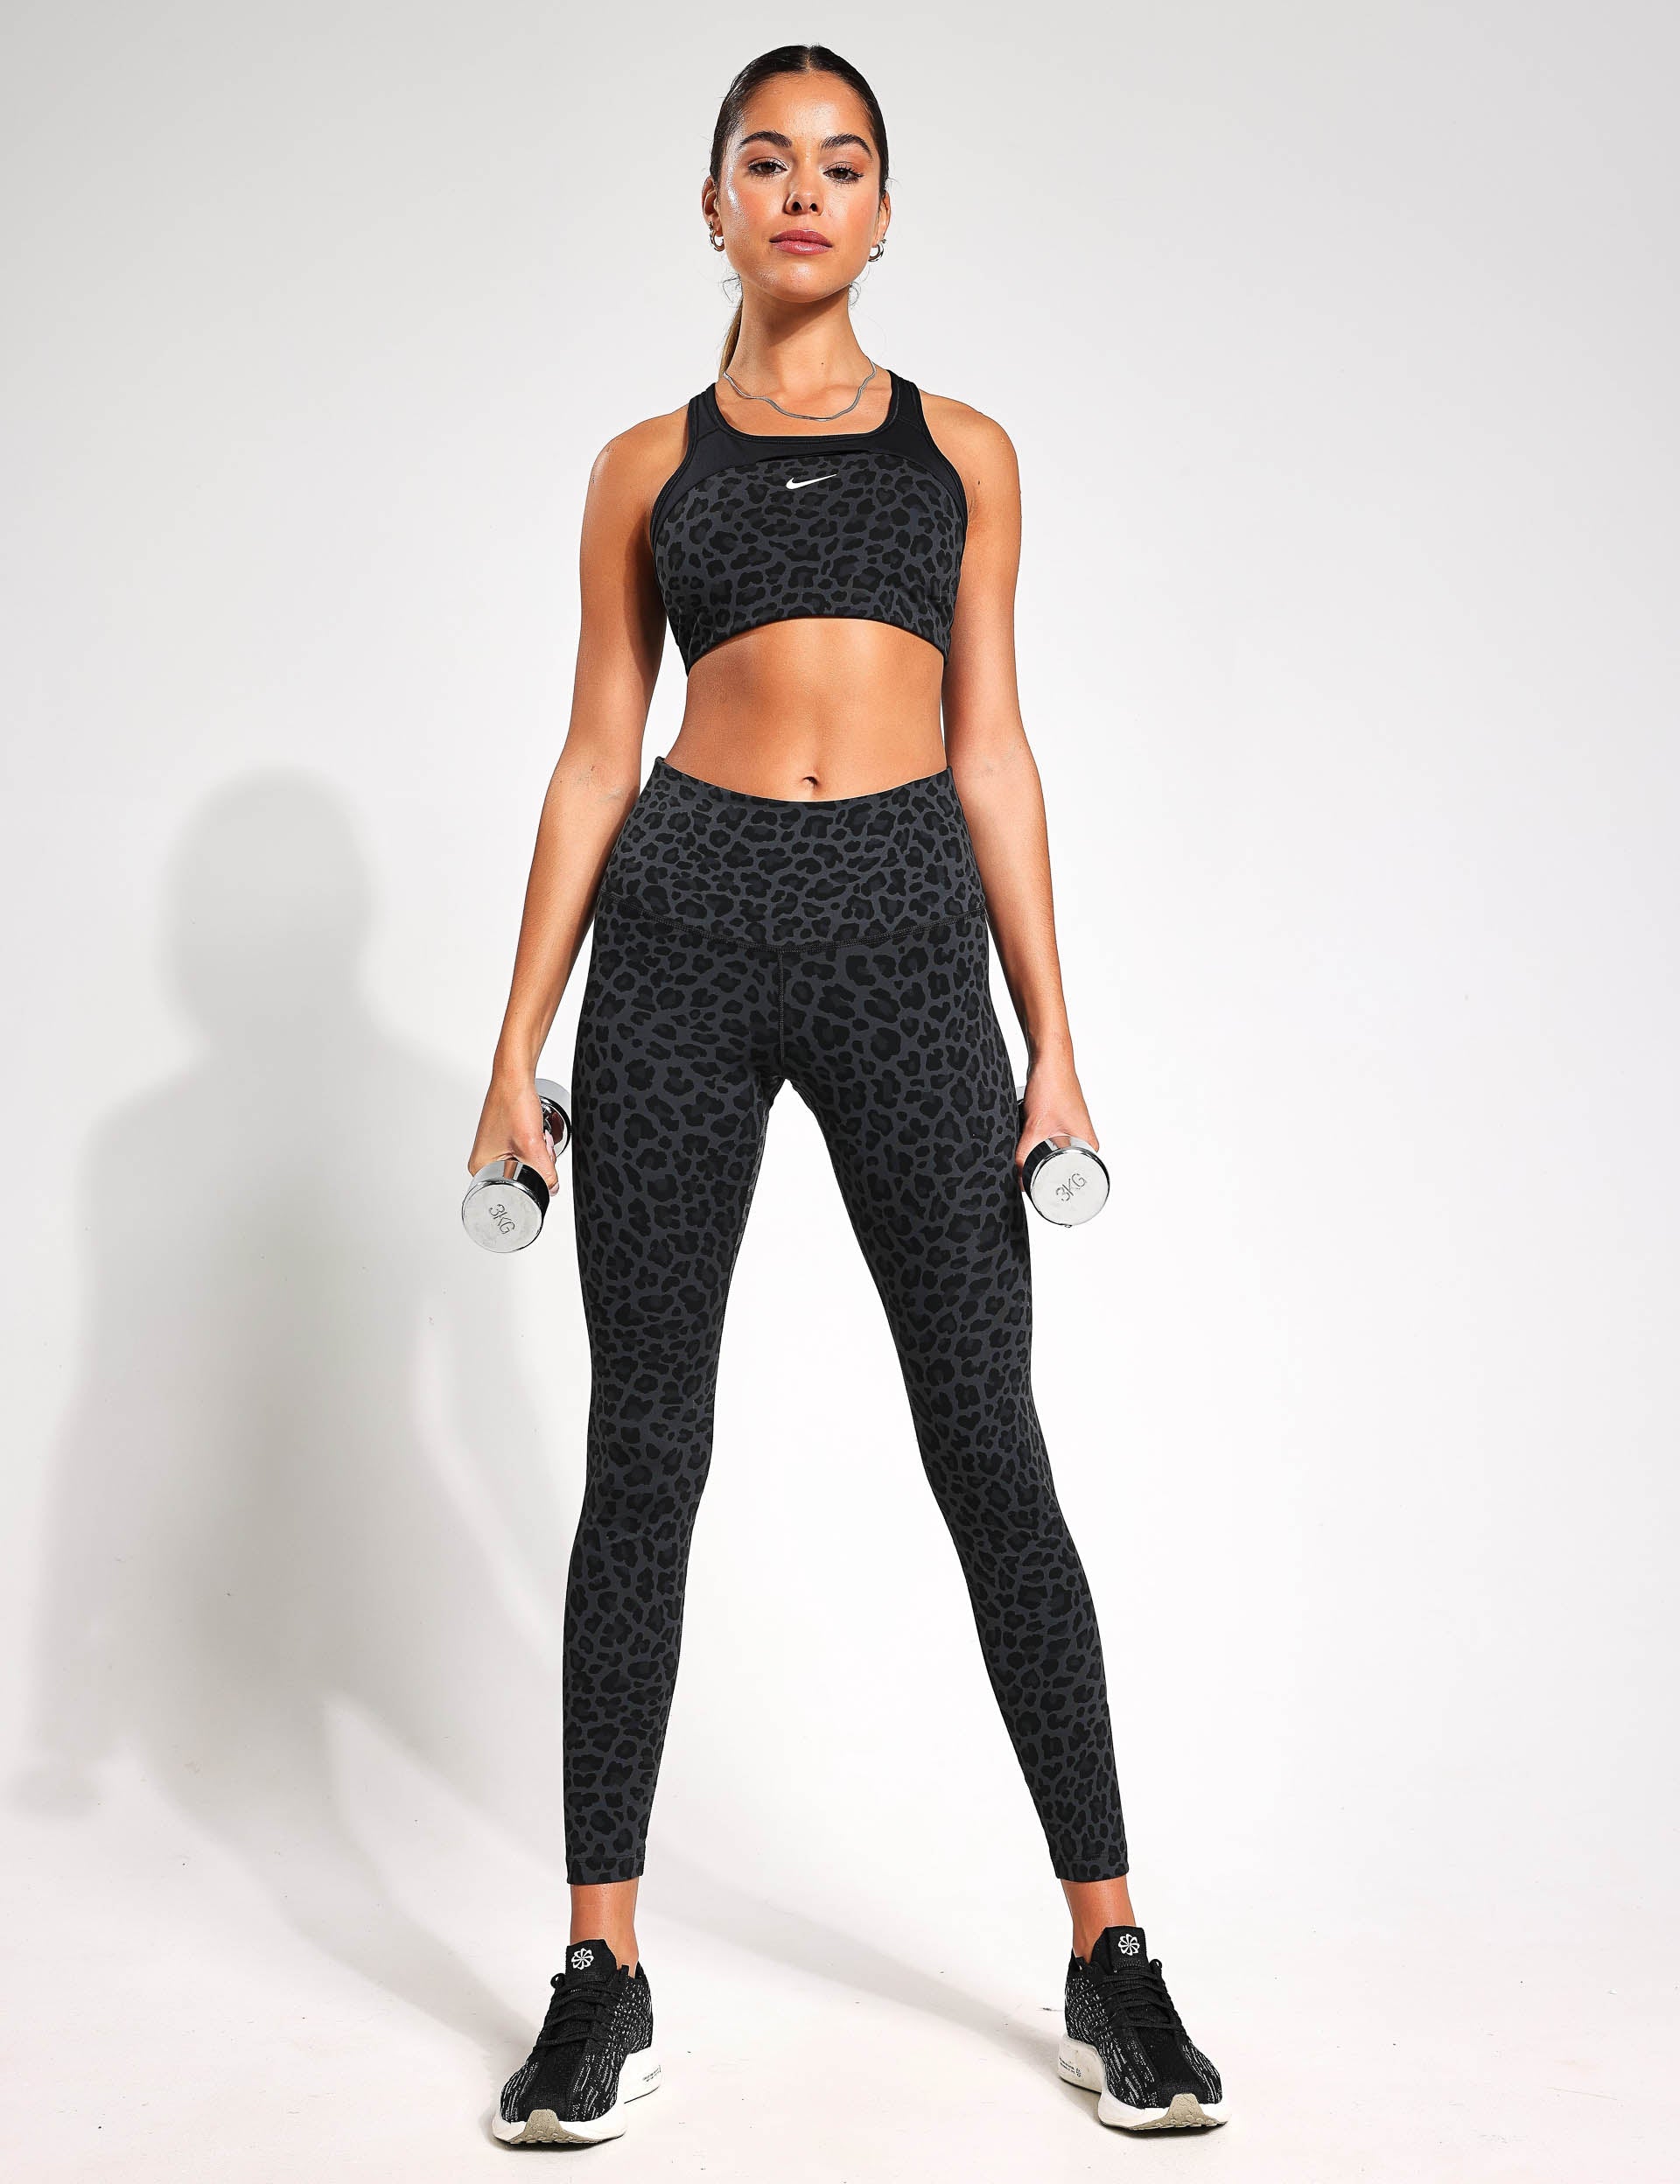 Nike Women's One Brown Multi Leopard Print HR Leggings (DM7274-256) Size S/M  NWT